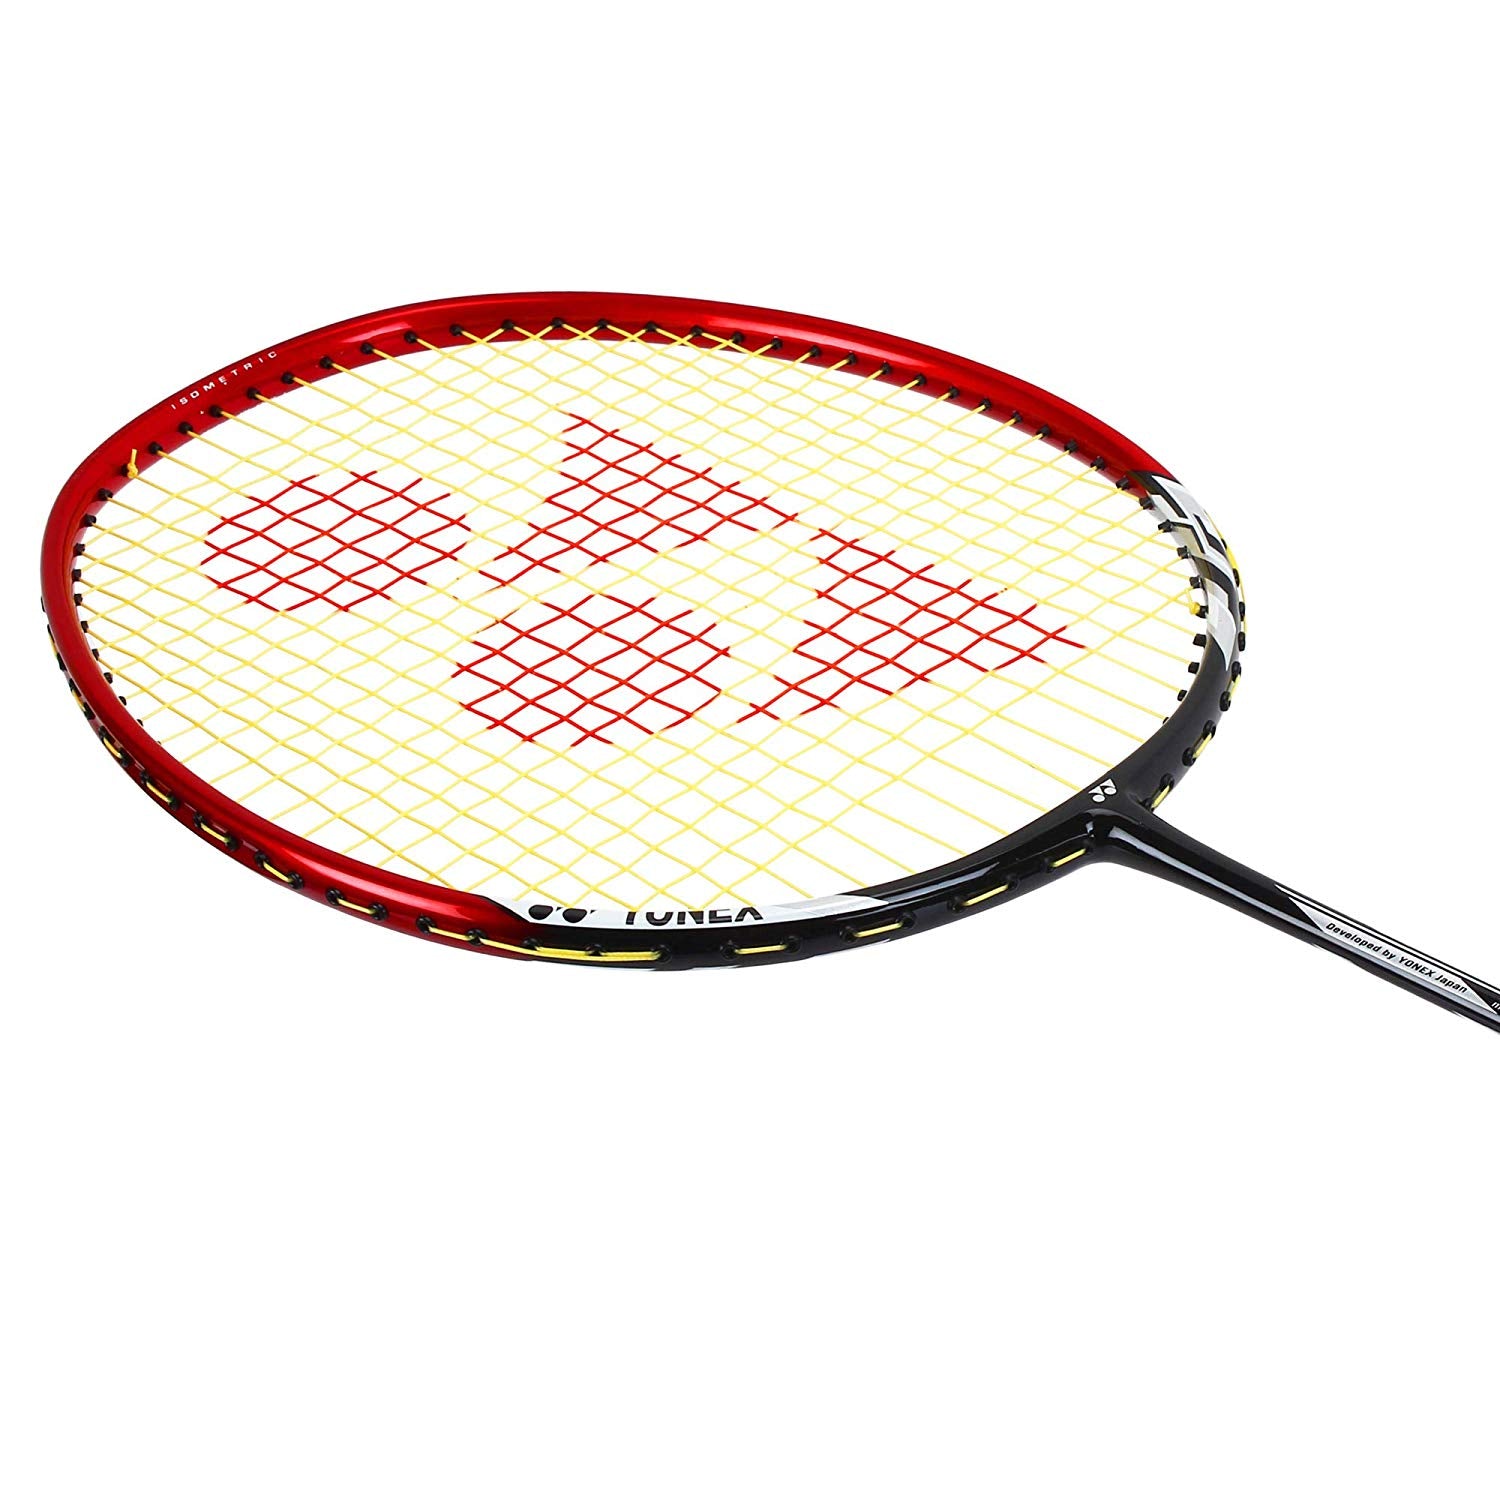 Yonex Nanoray 6000I G4-U Badminton Racquet (Red) - Best Price online Prokicksports.com